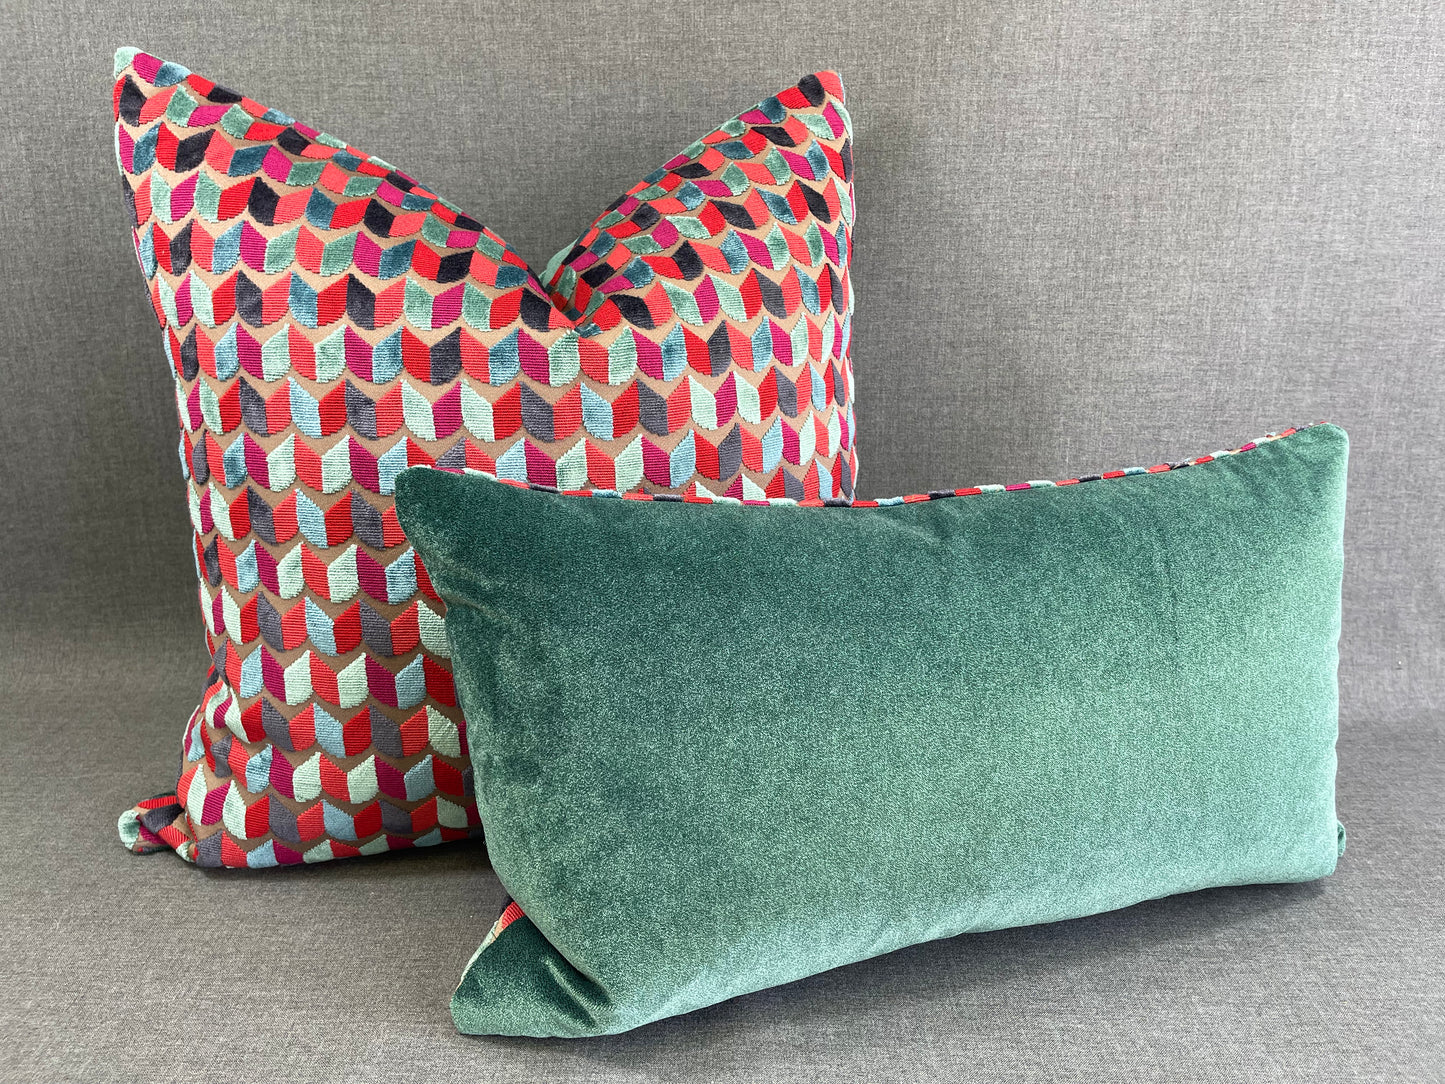 Luxury Lumbar Pillow 24" x 14" - Court Jester; Bright Green, Red, Blue in a geometric cut velvet pattern